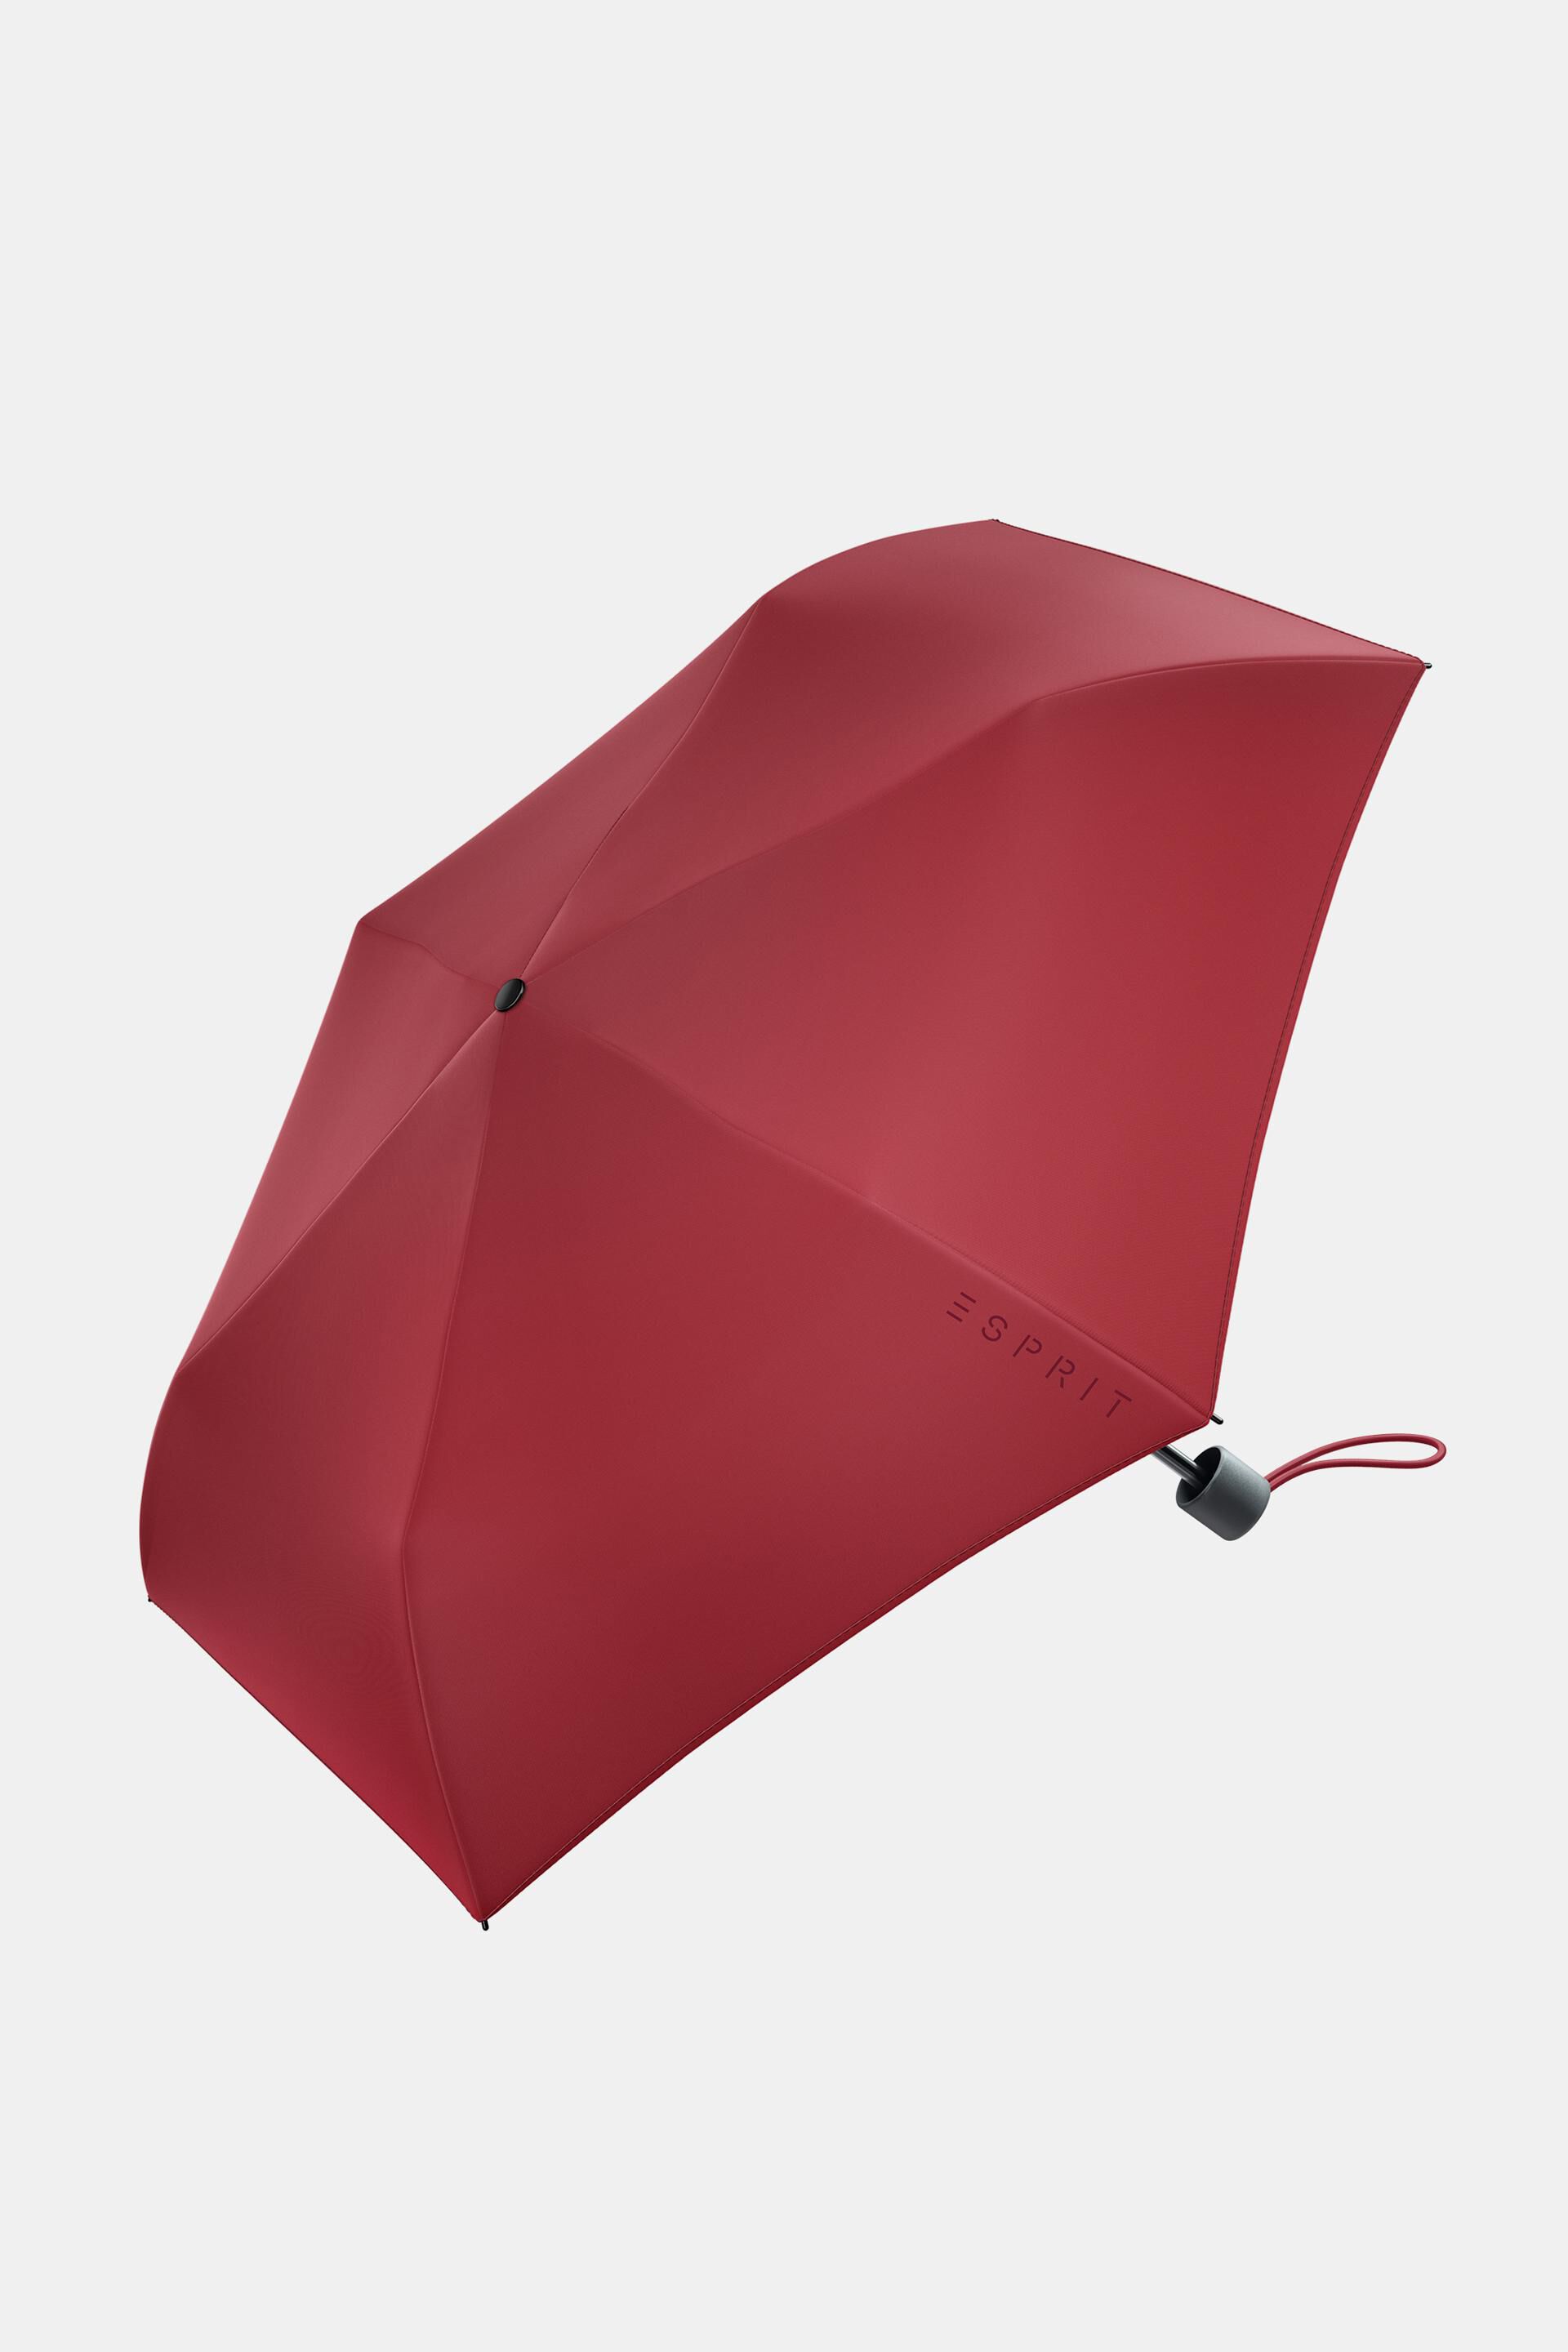 Esprit logo with in print red umbrella Pocket